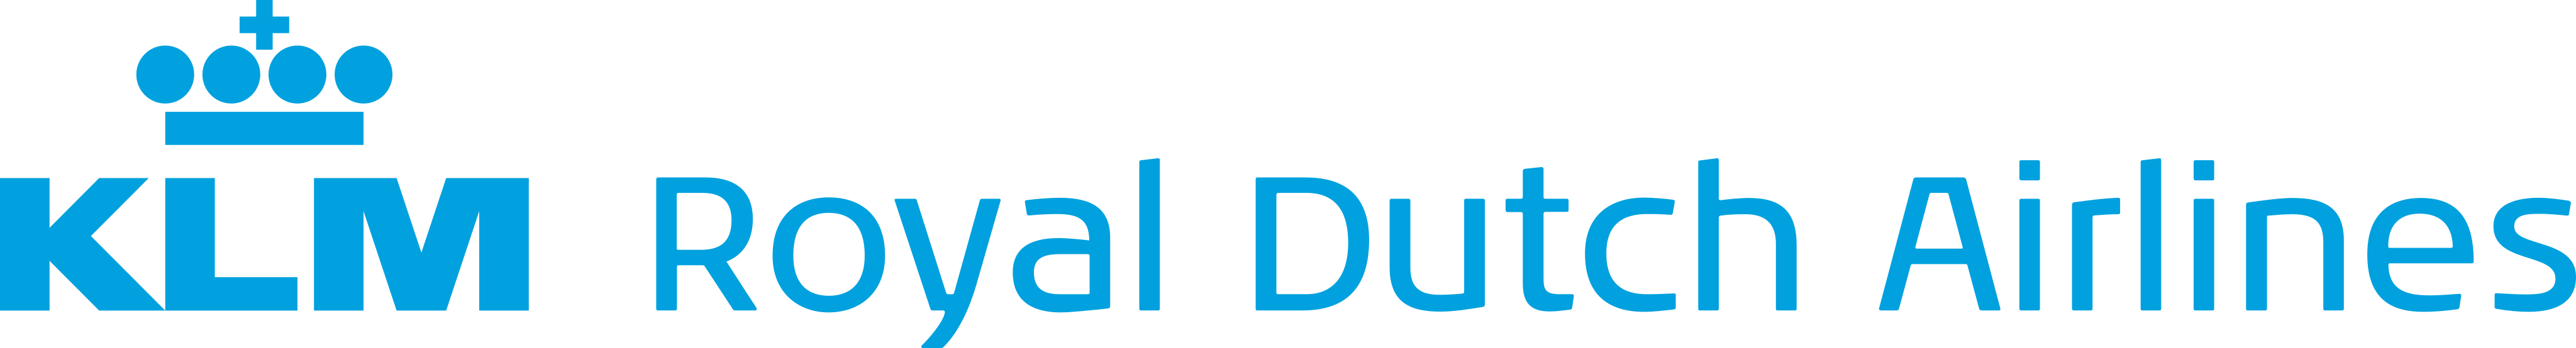 klm logo - KLM Logo